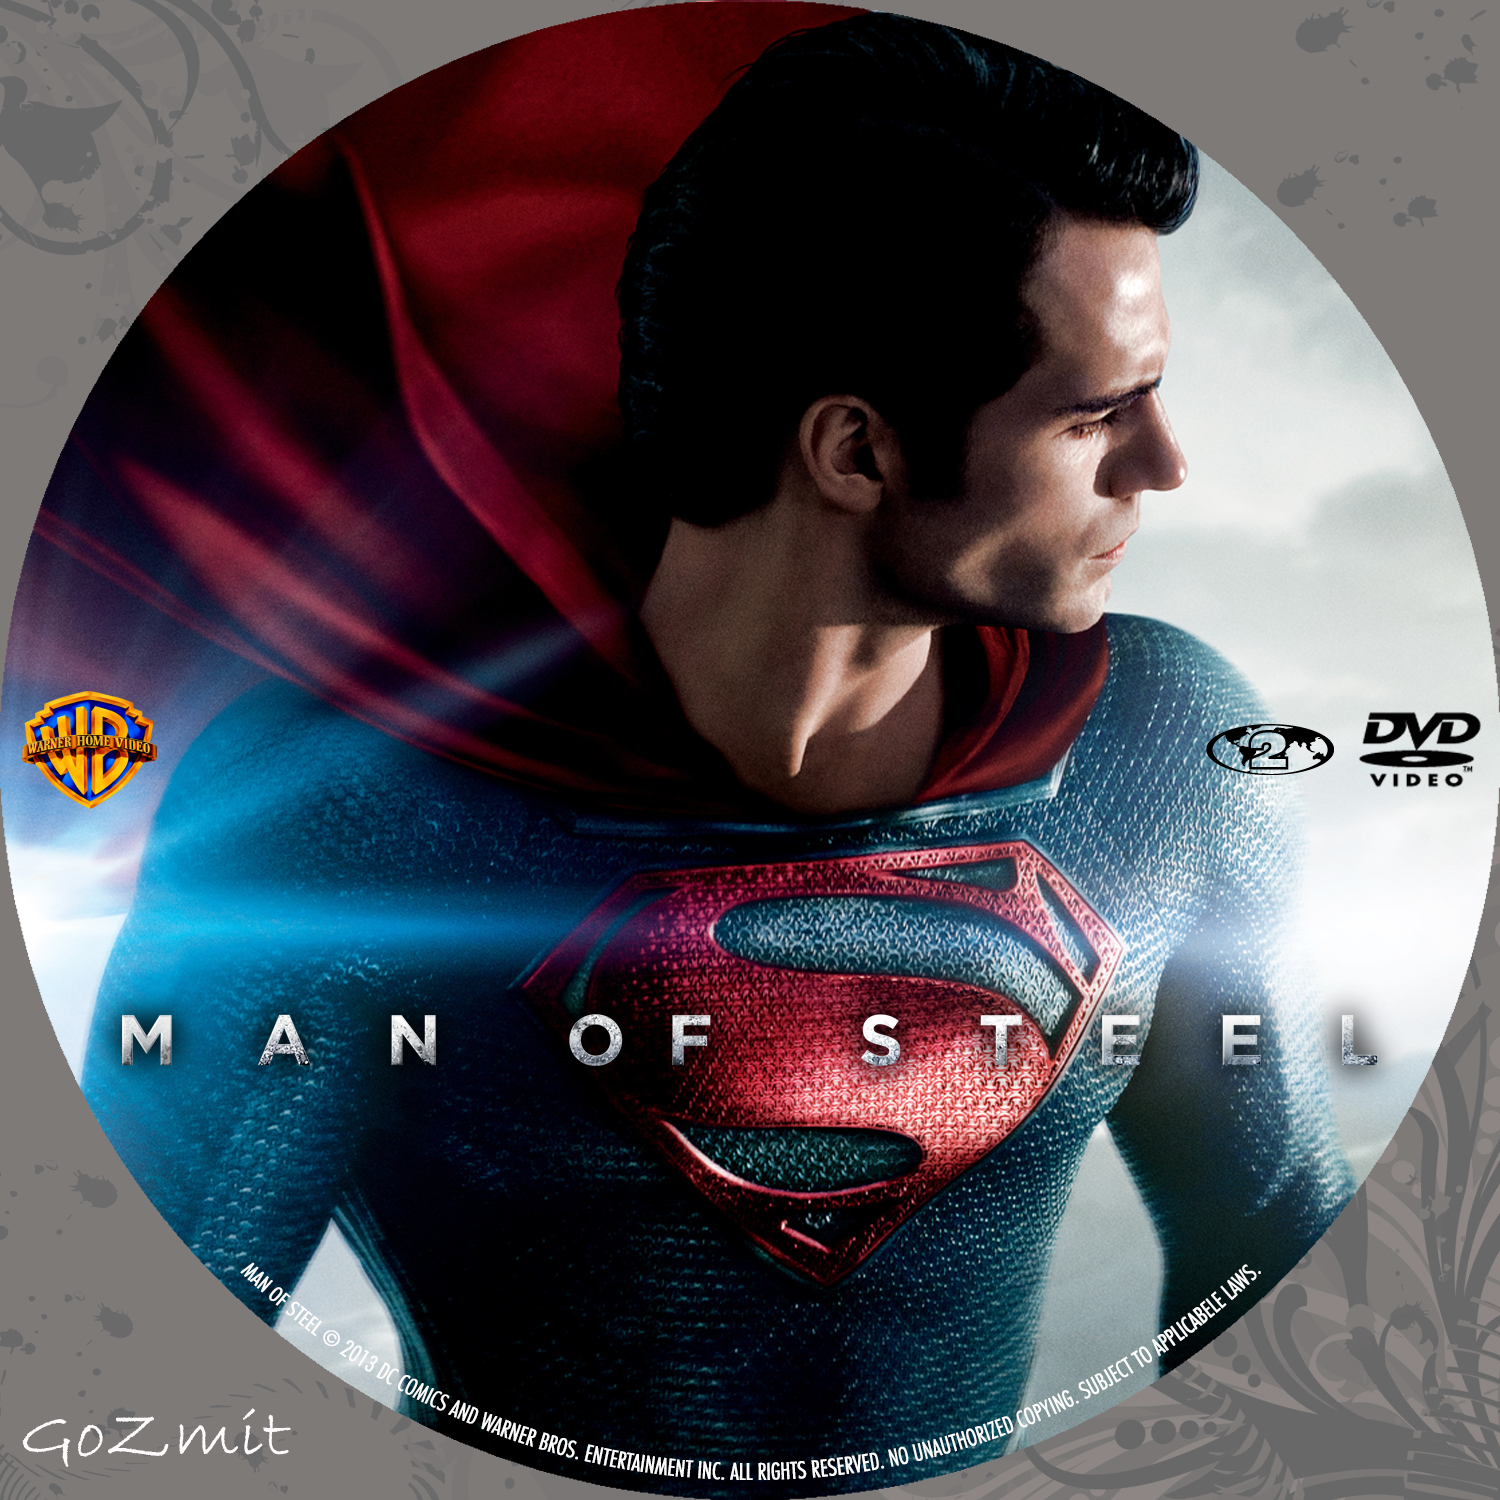 man of steel dvd cover art